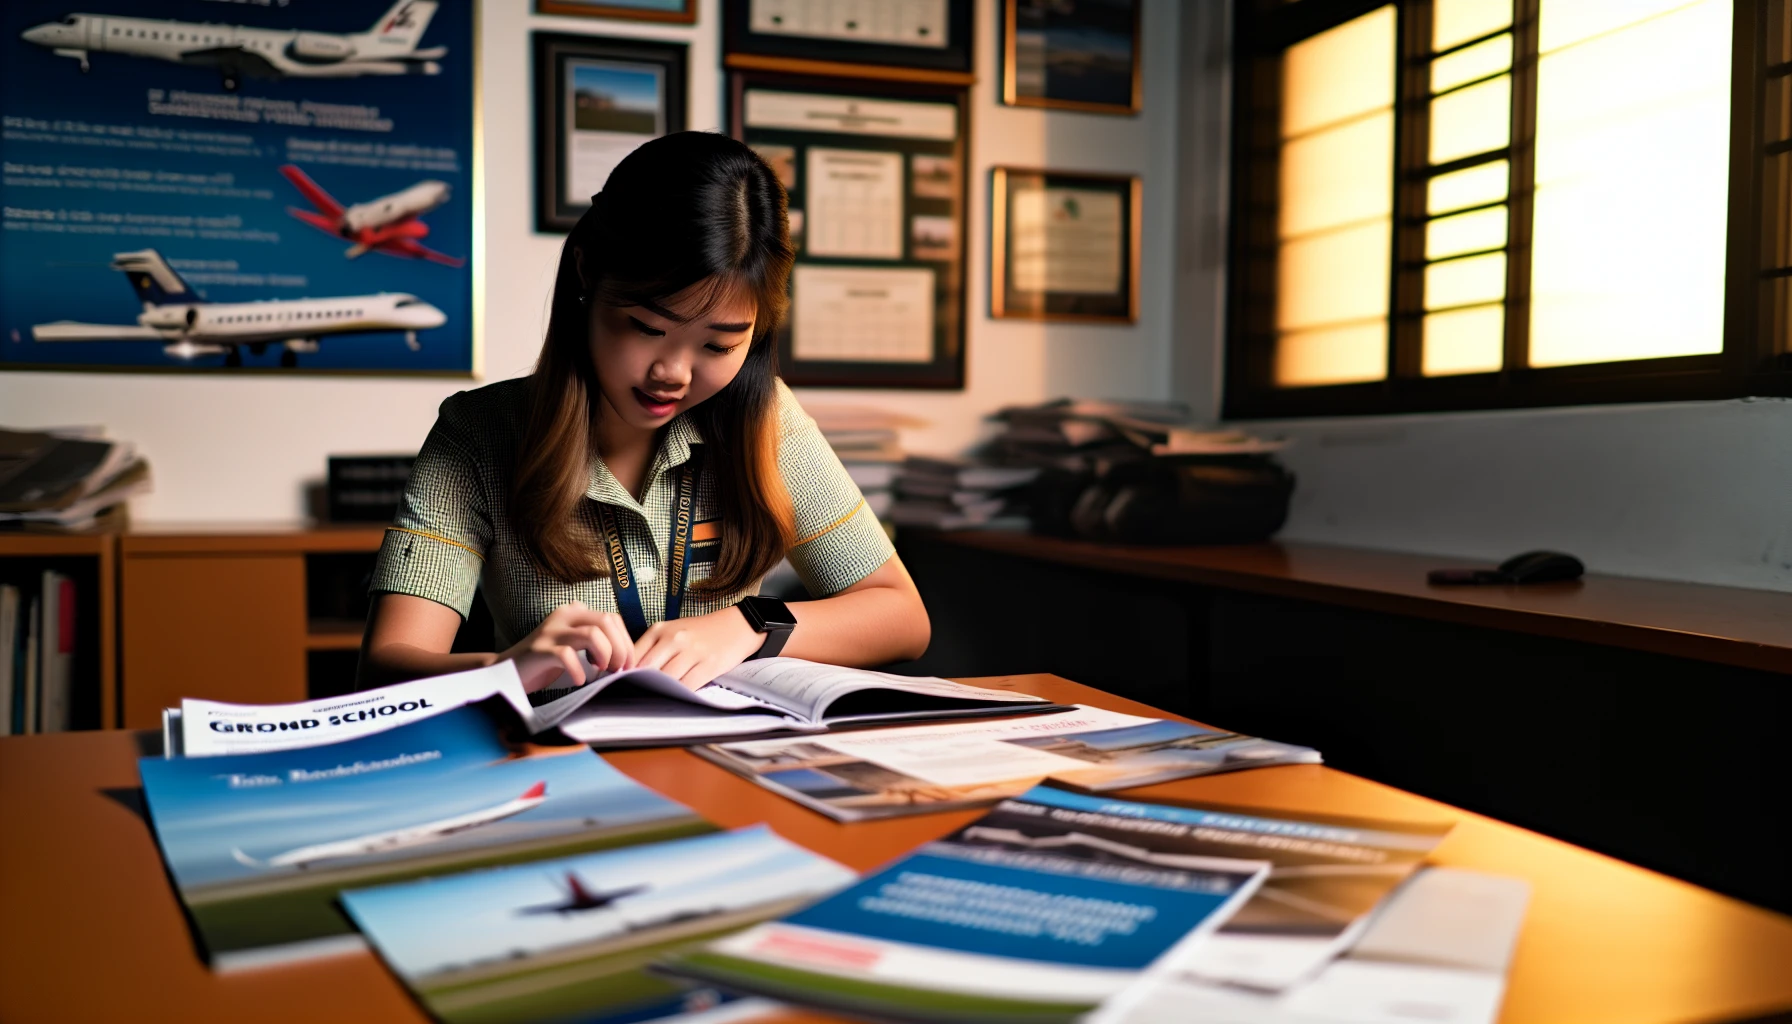 A prospective student evaluating different flight schools